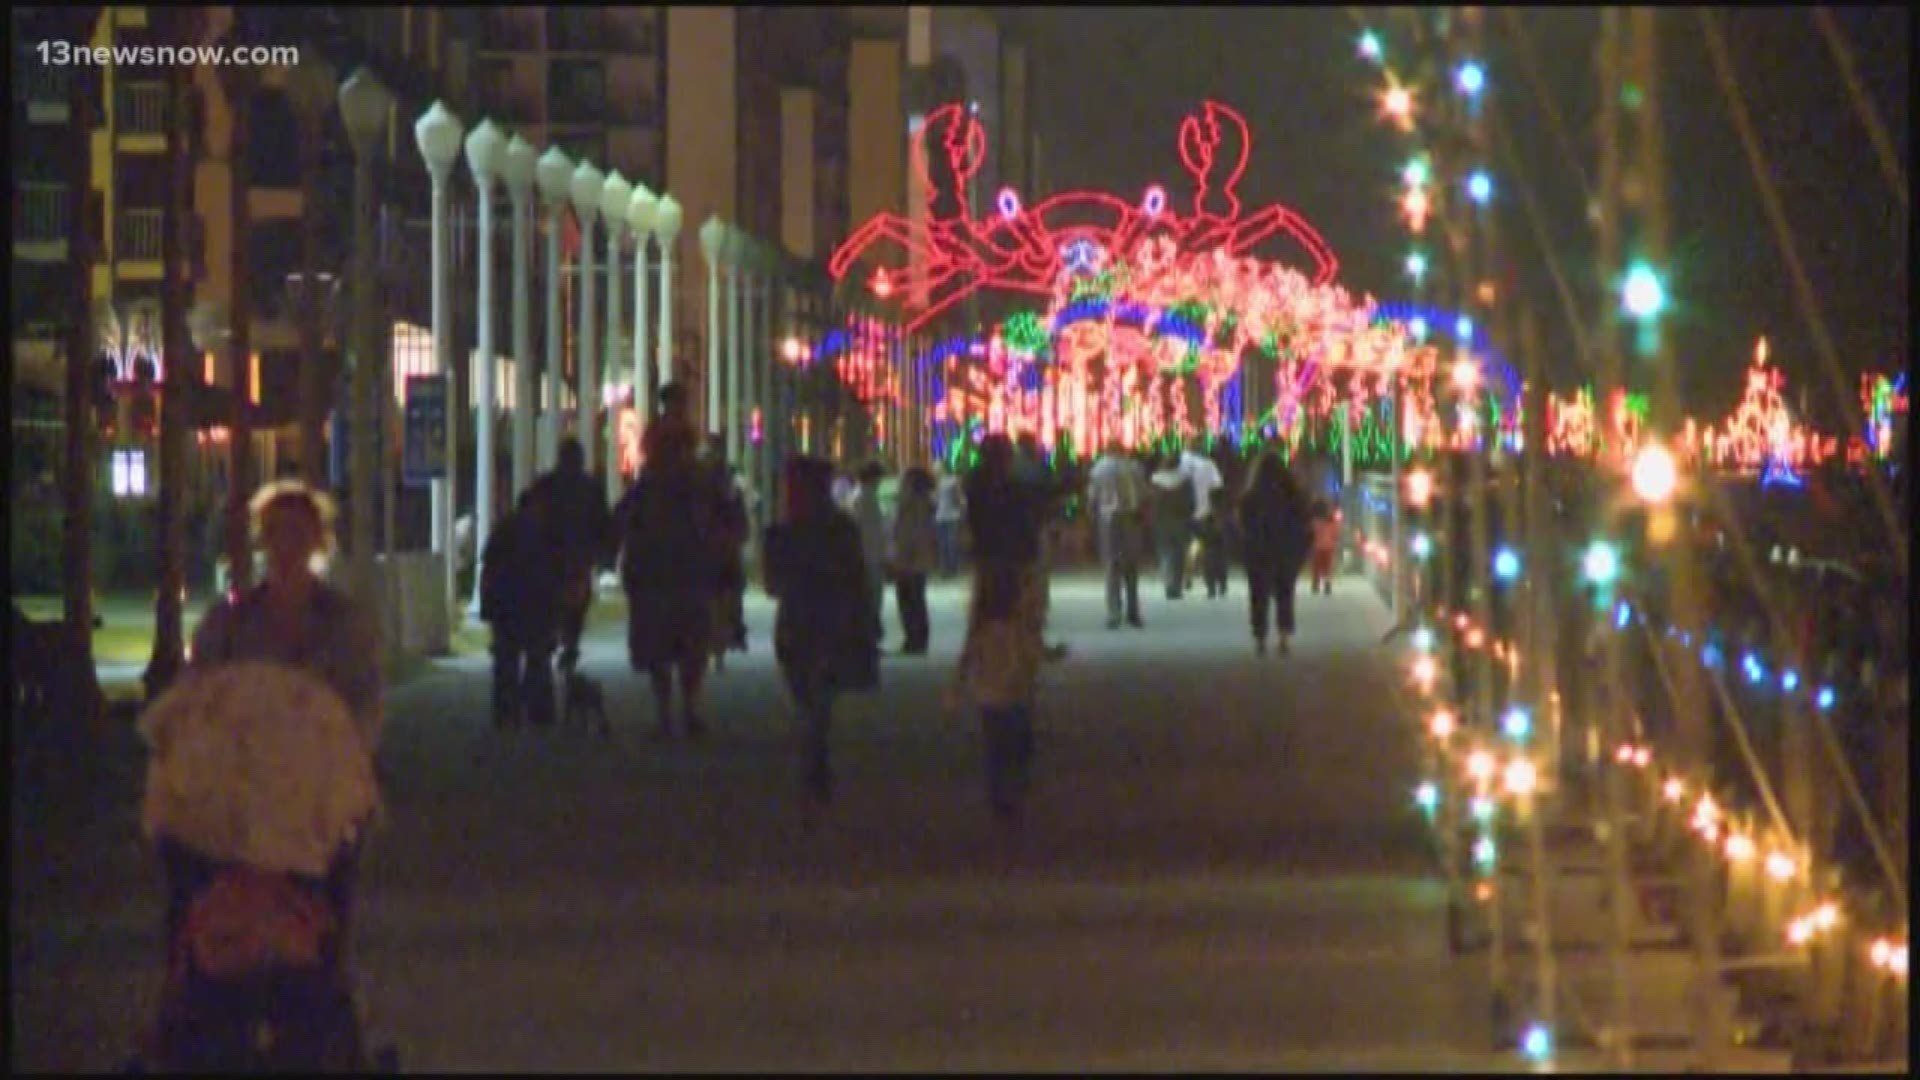 Grand Illumination Parade lights up Downtown Norfolk